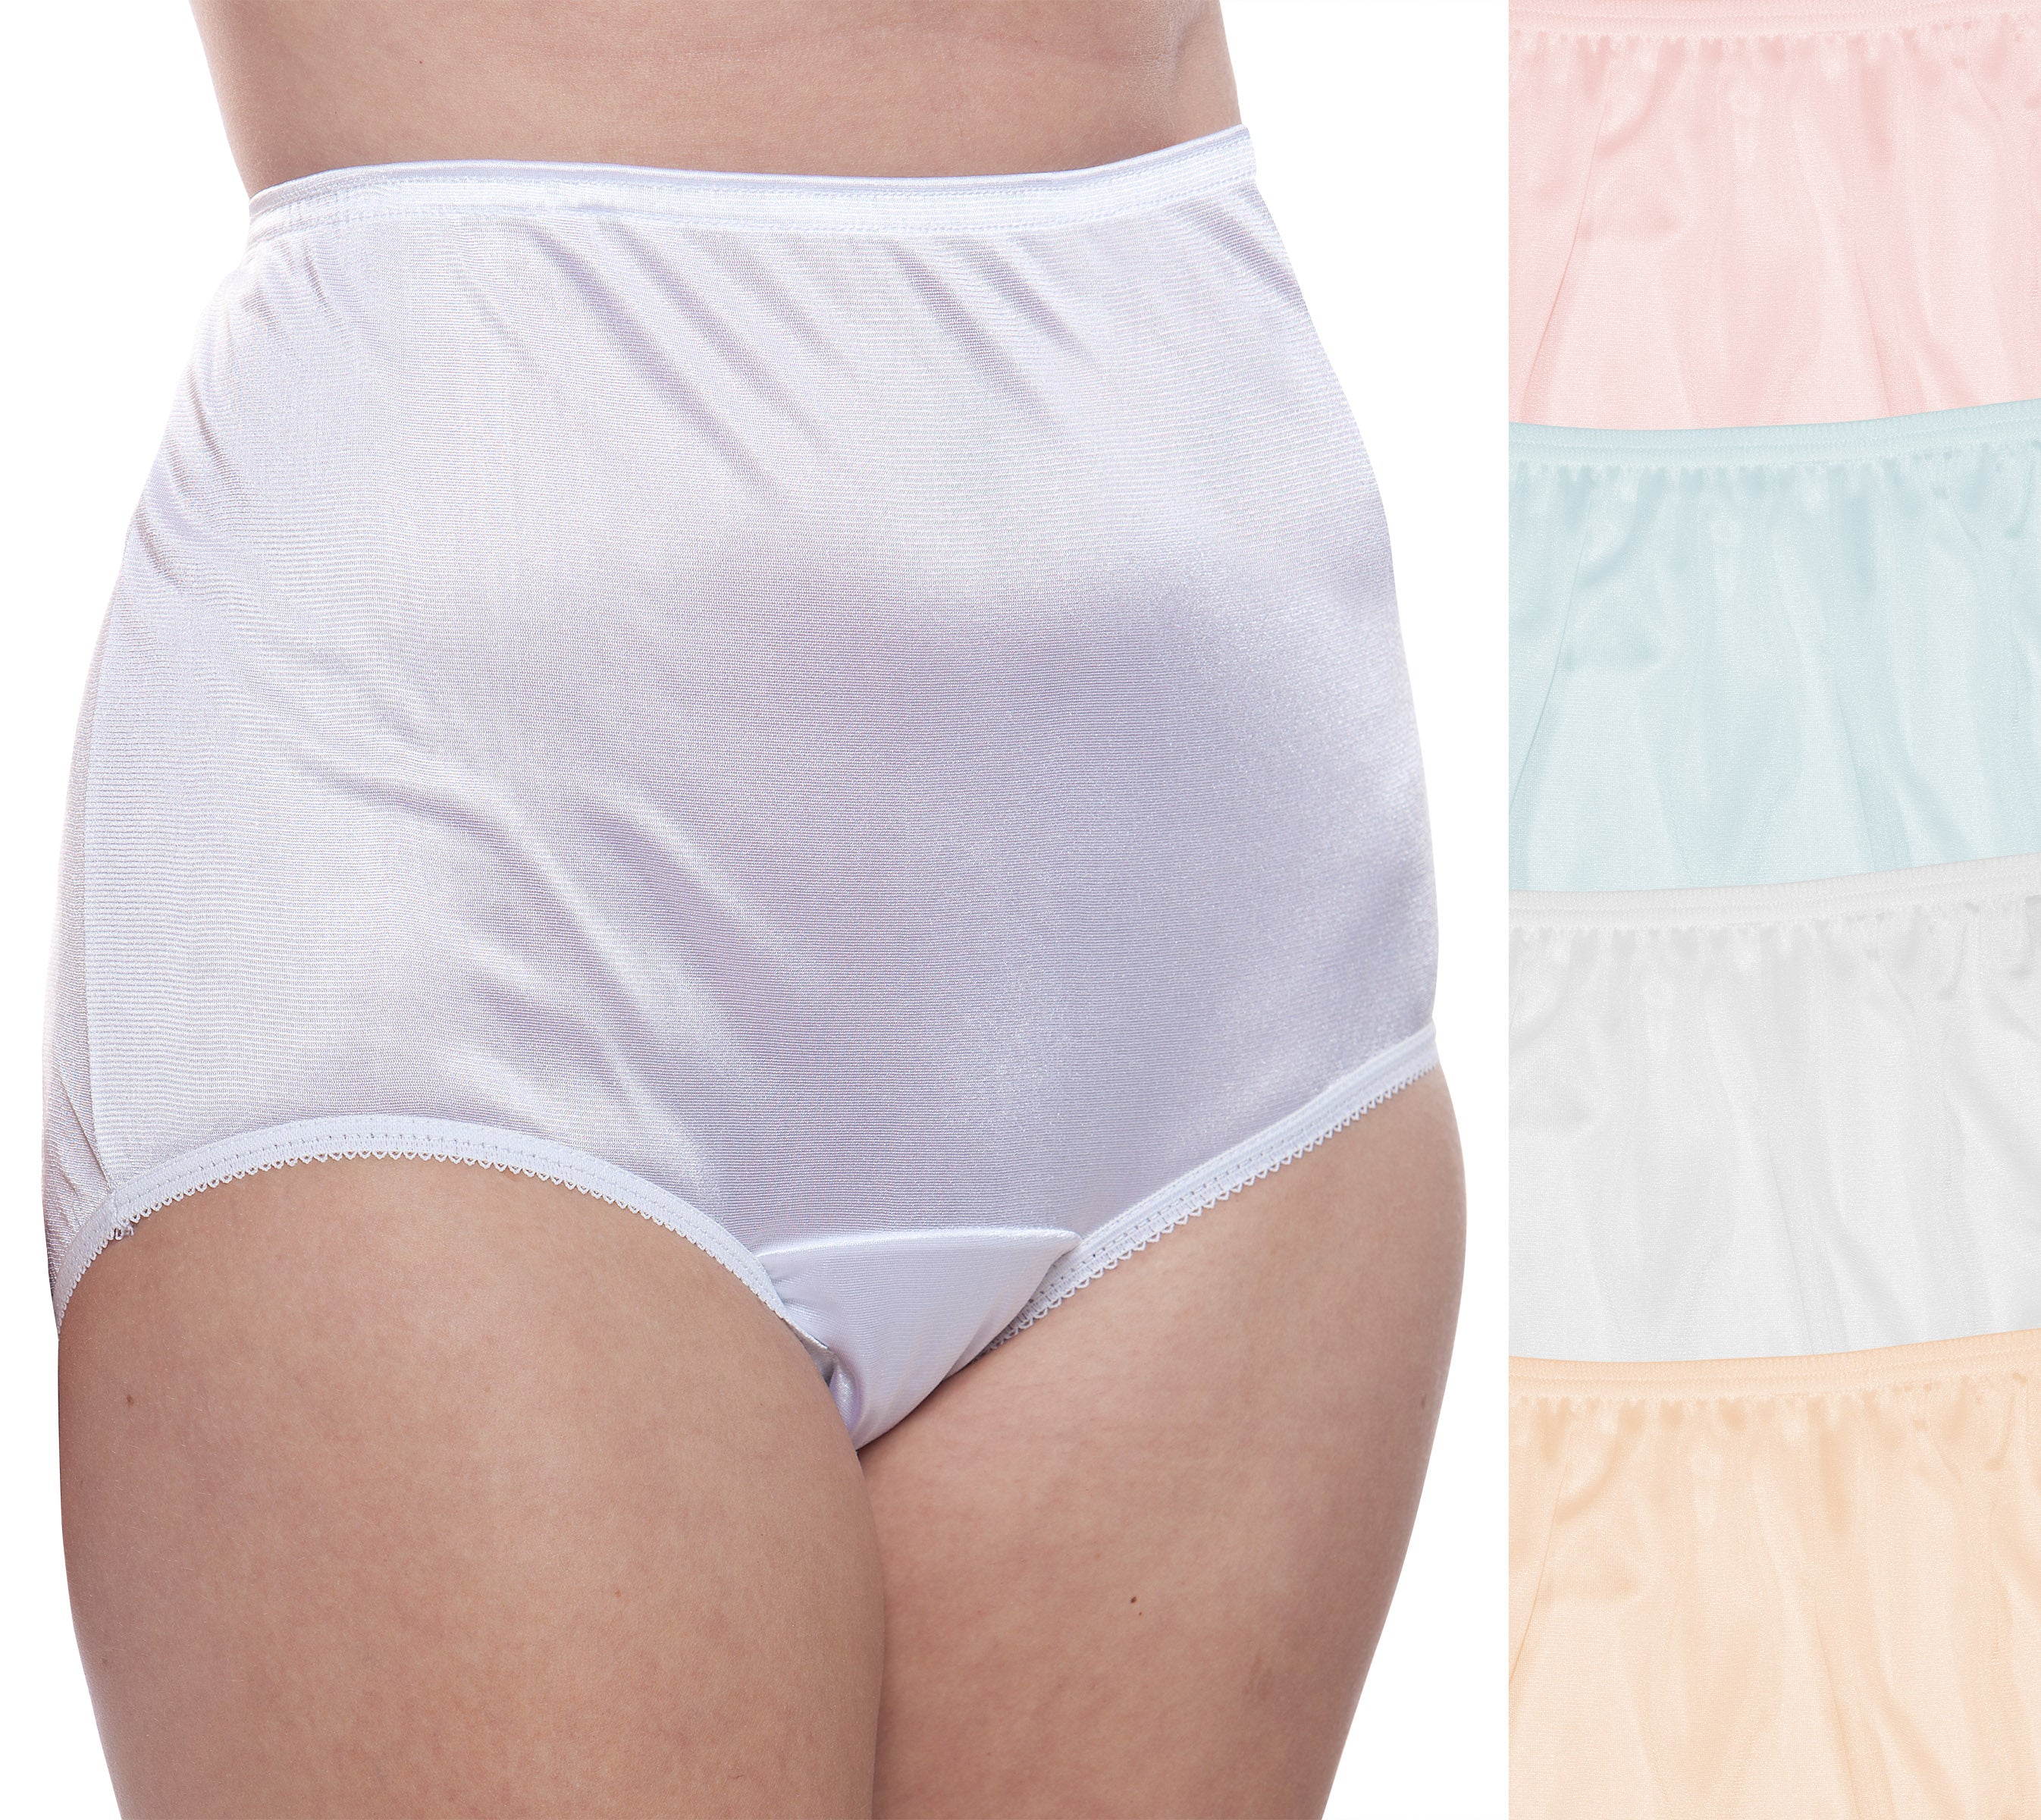 Nylon High Waist Underwear, Nylon Underpants Lingerie